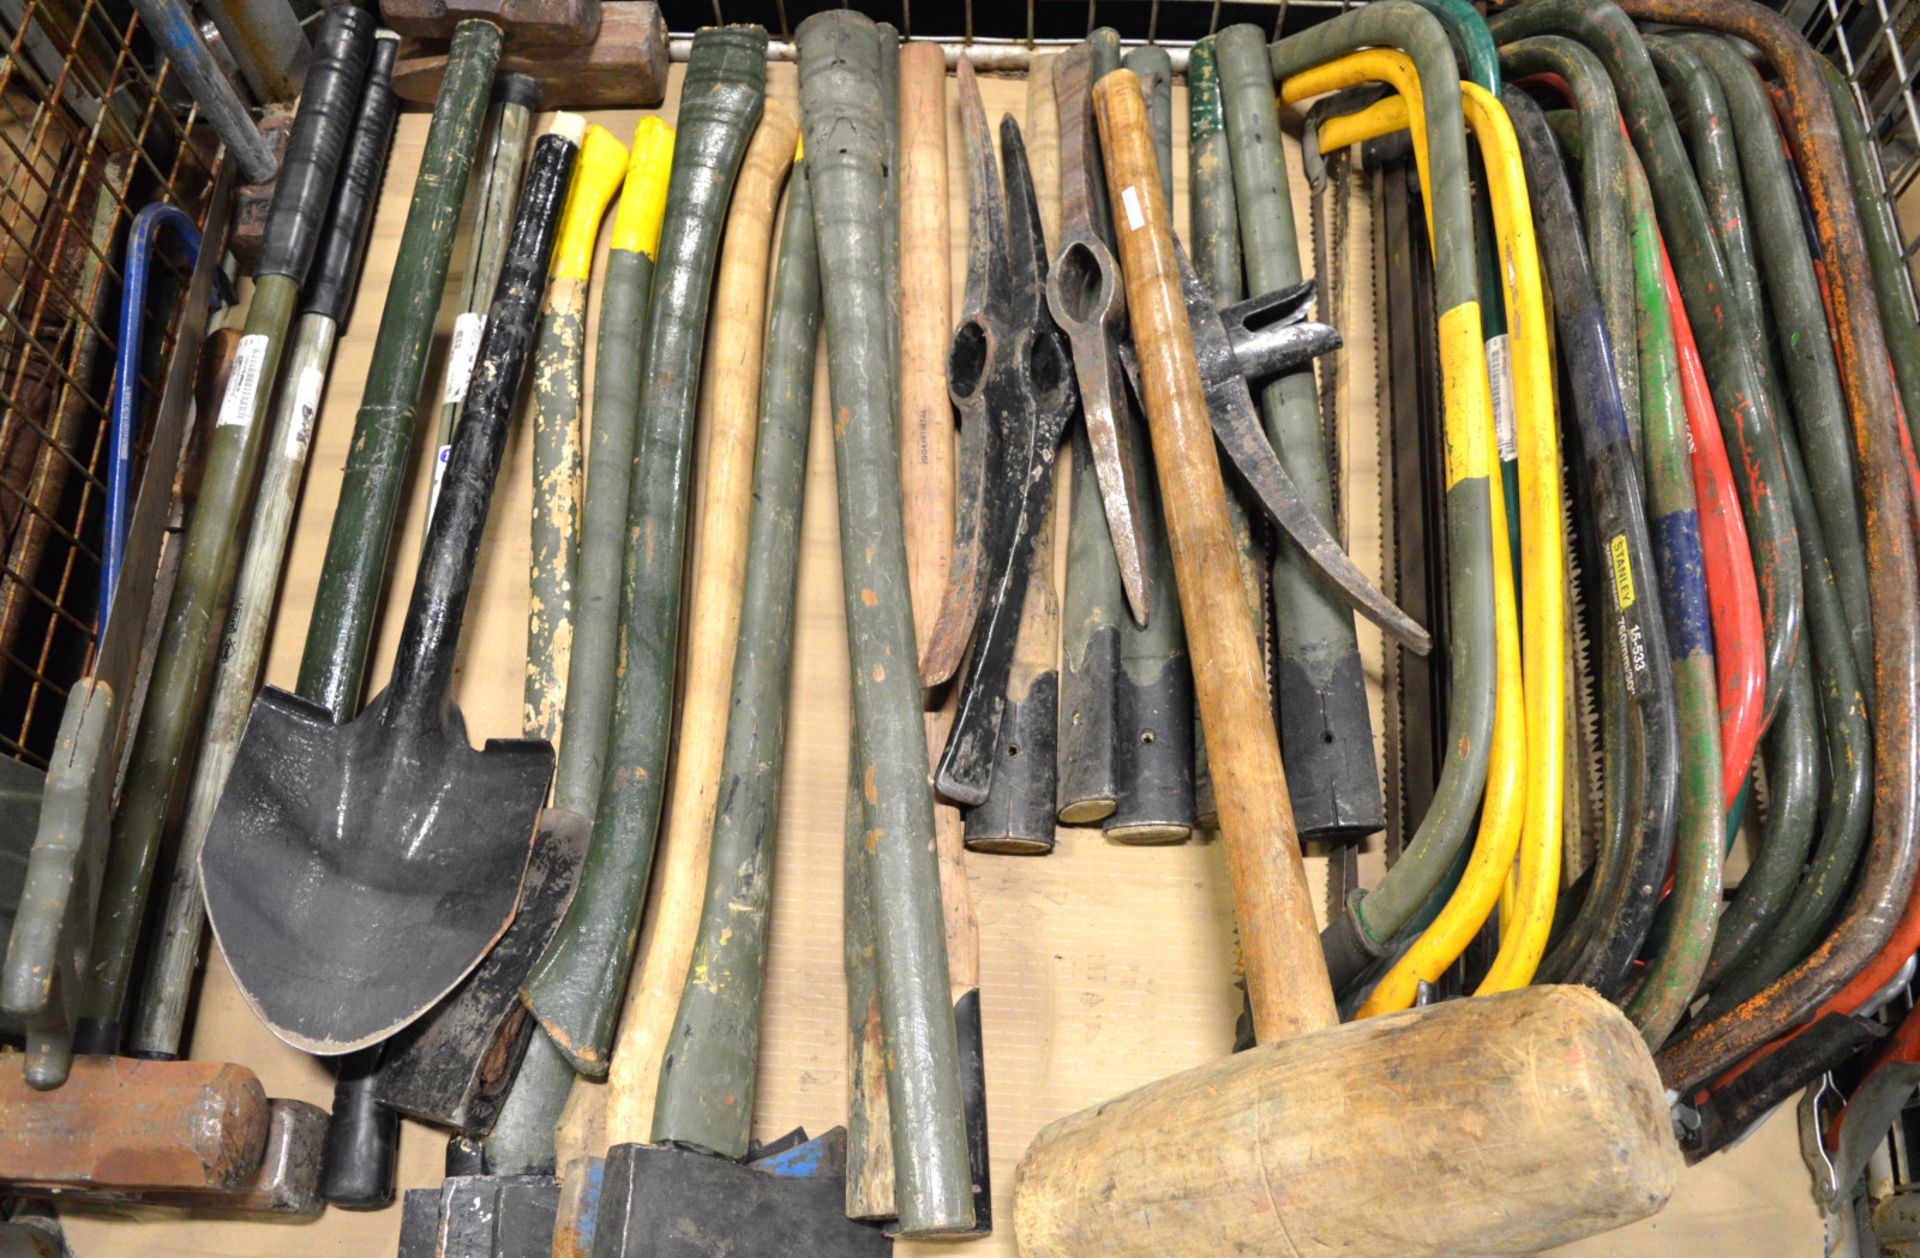 18x Bowsaws, 5x Axes, 4x Sledgehammers, Picks, Shovels, Wrecking Bar. - Image 2 of 2